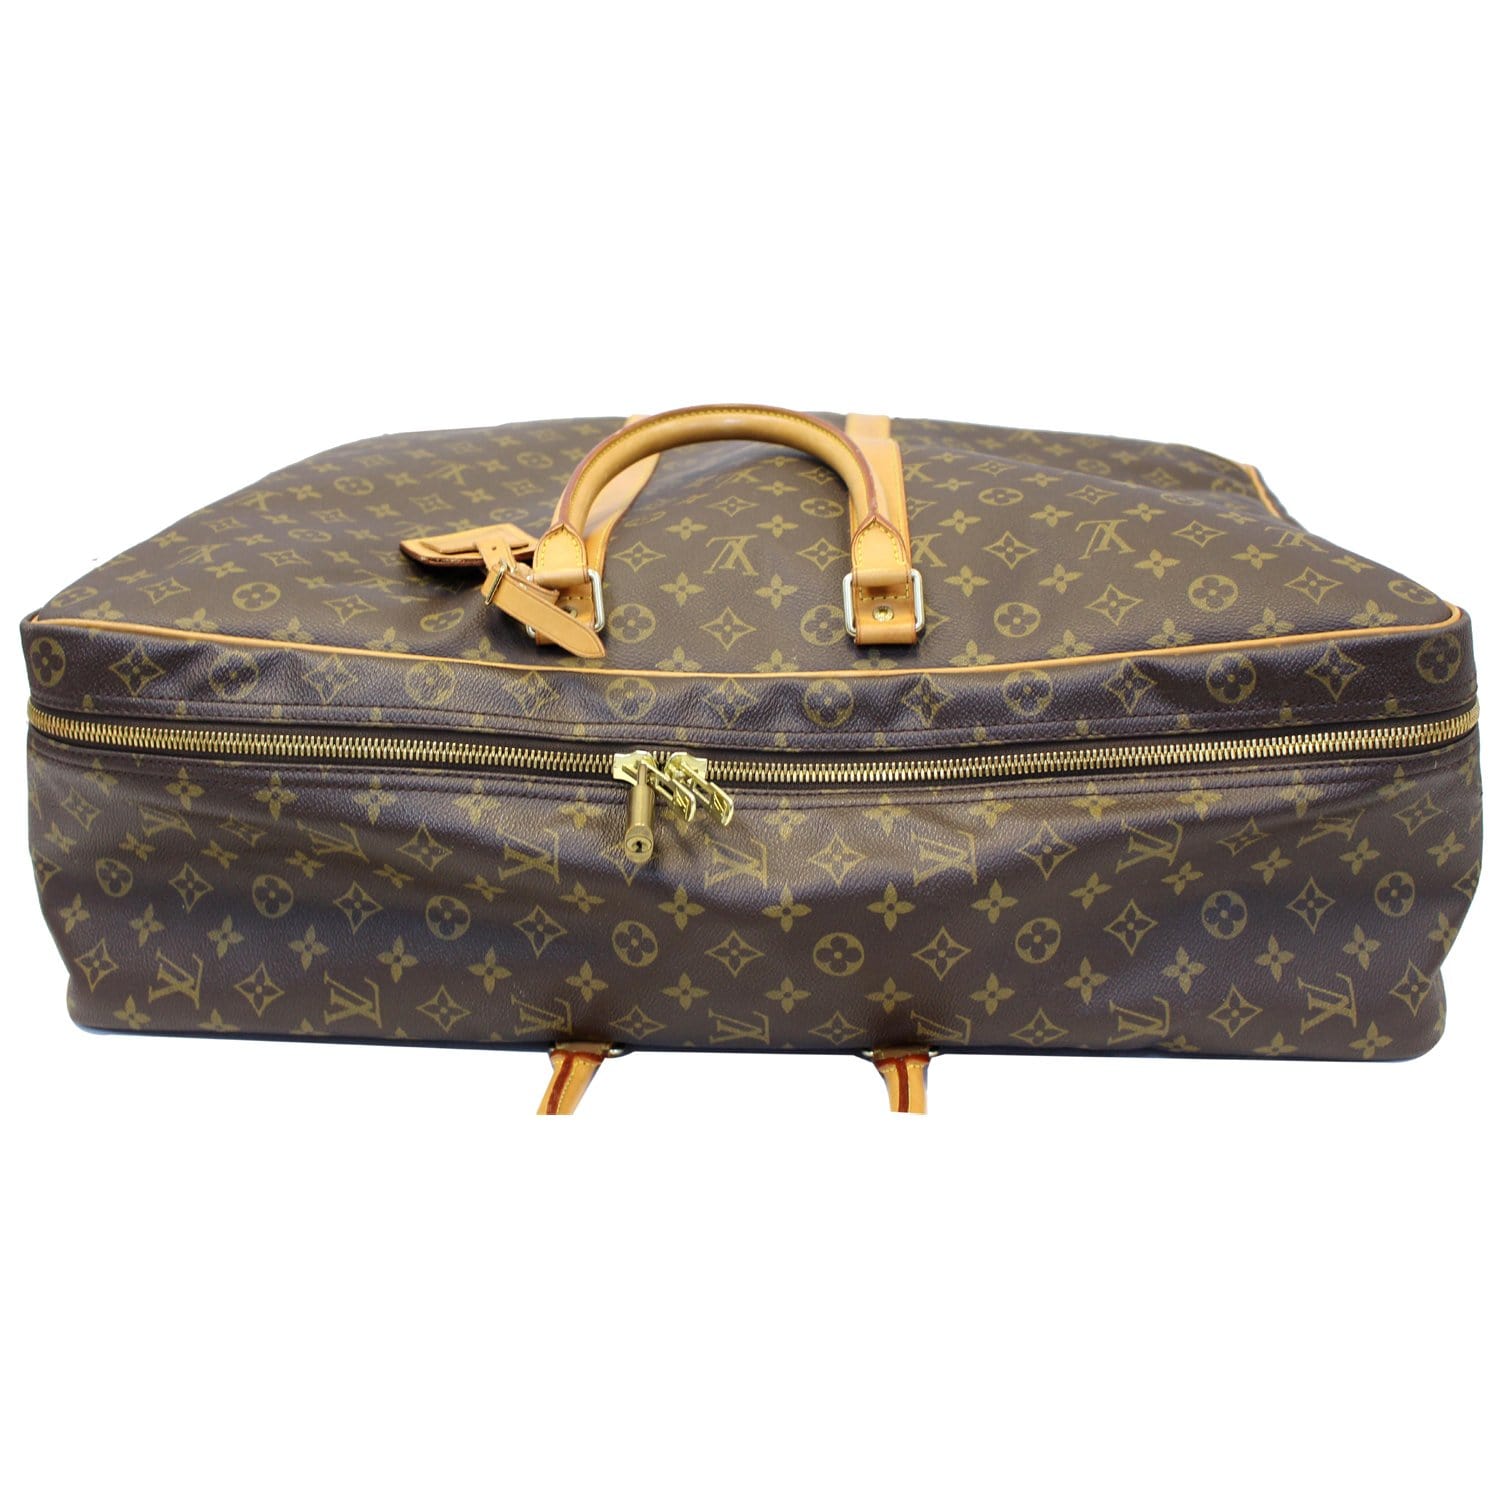 LOUIS VUITTON Sirius 55 Monogram Canvas Suitcase Travel Bag Brown